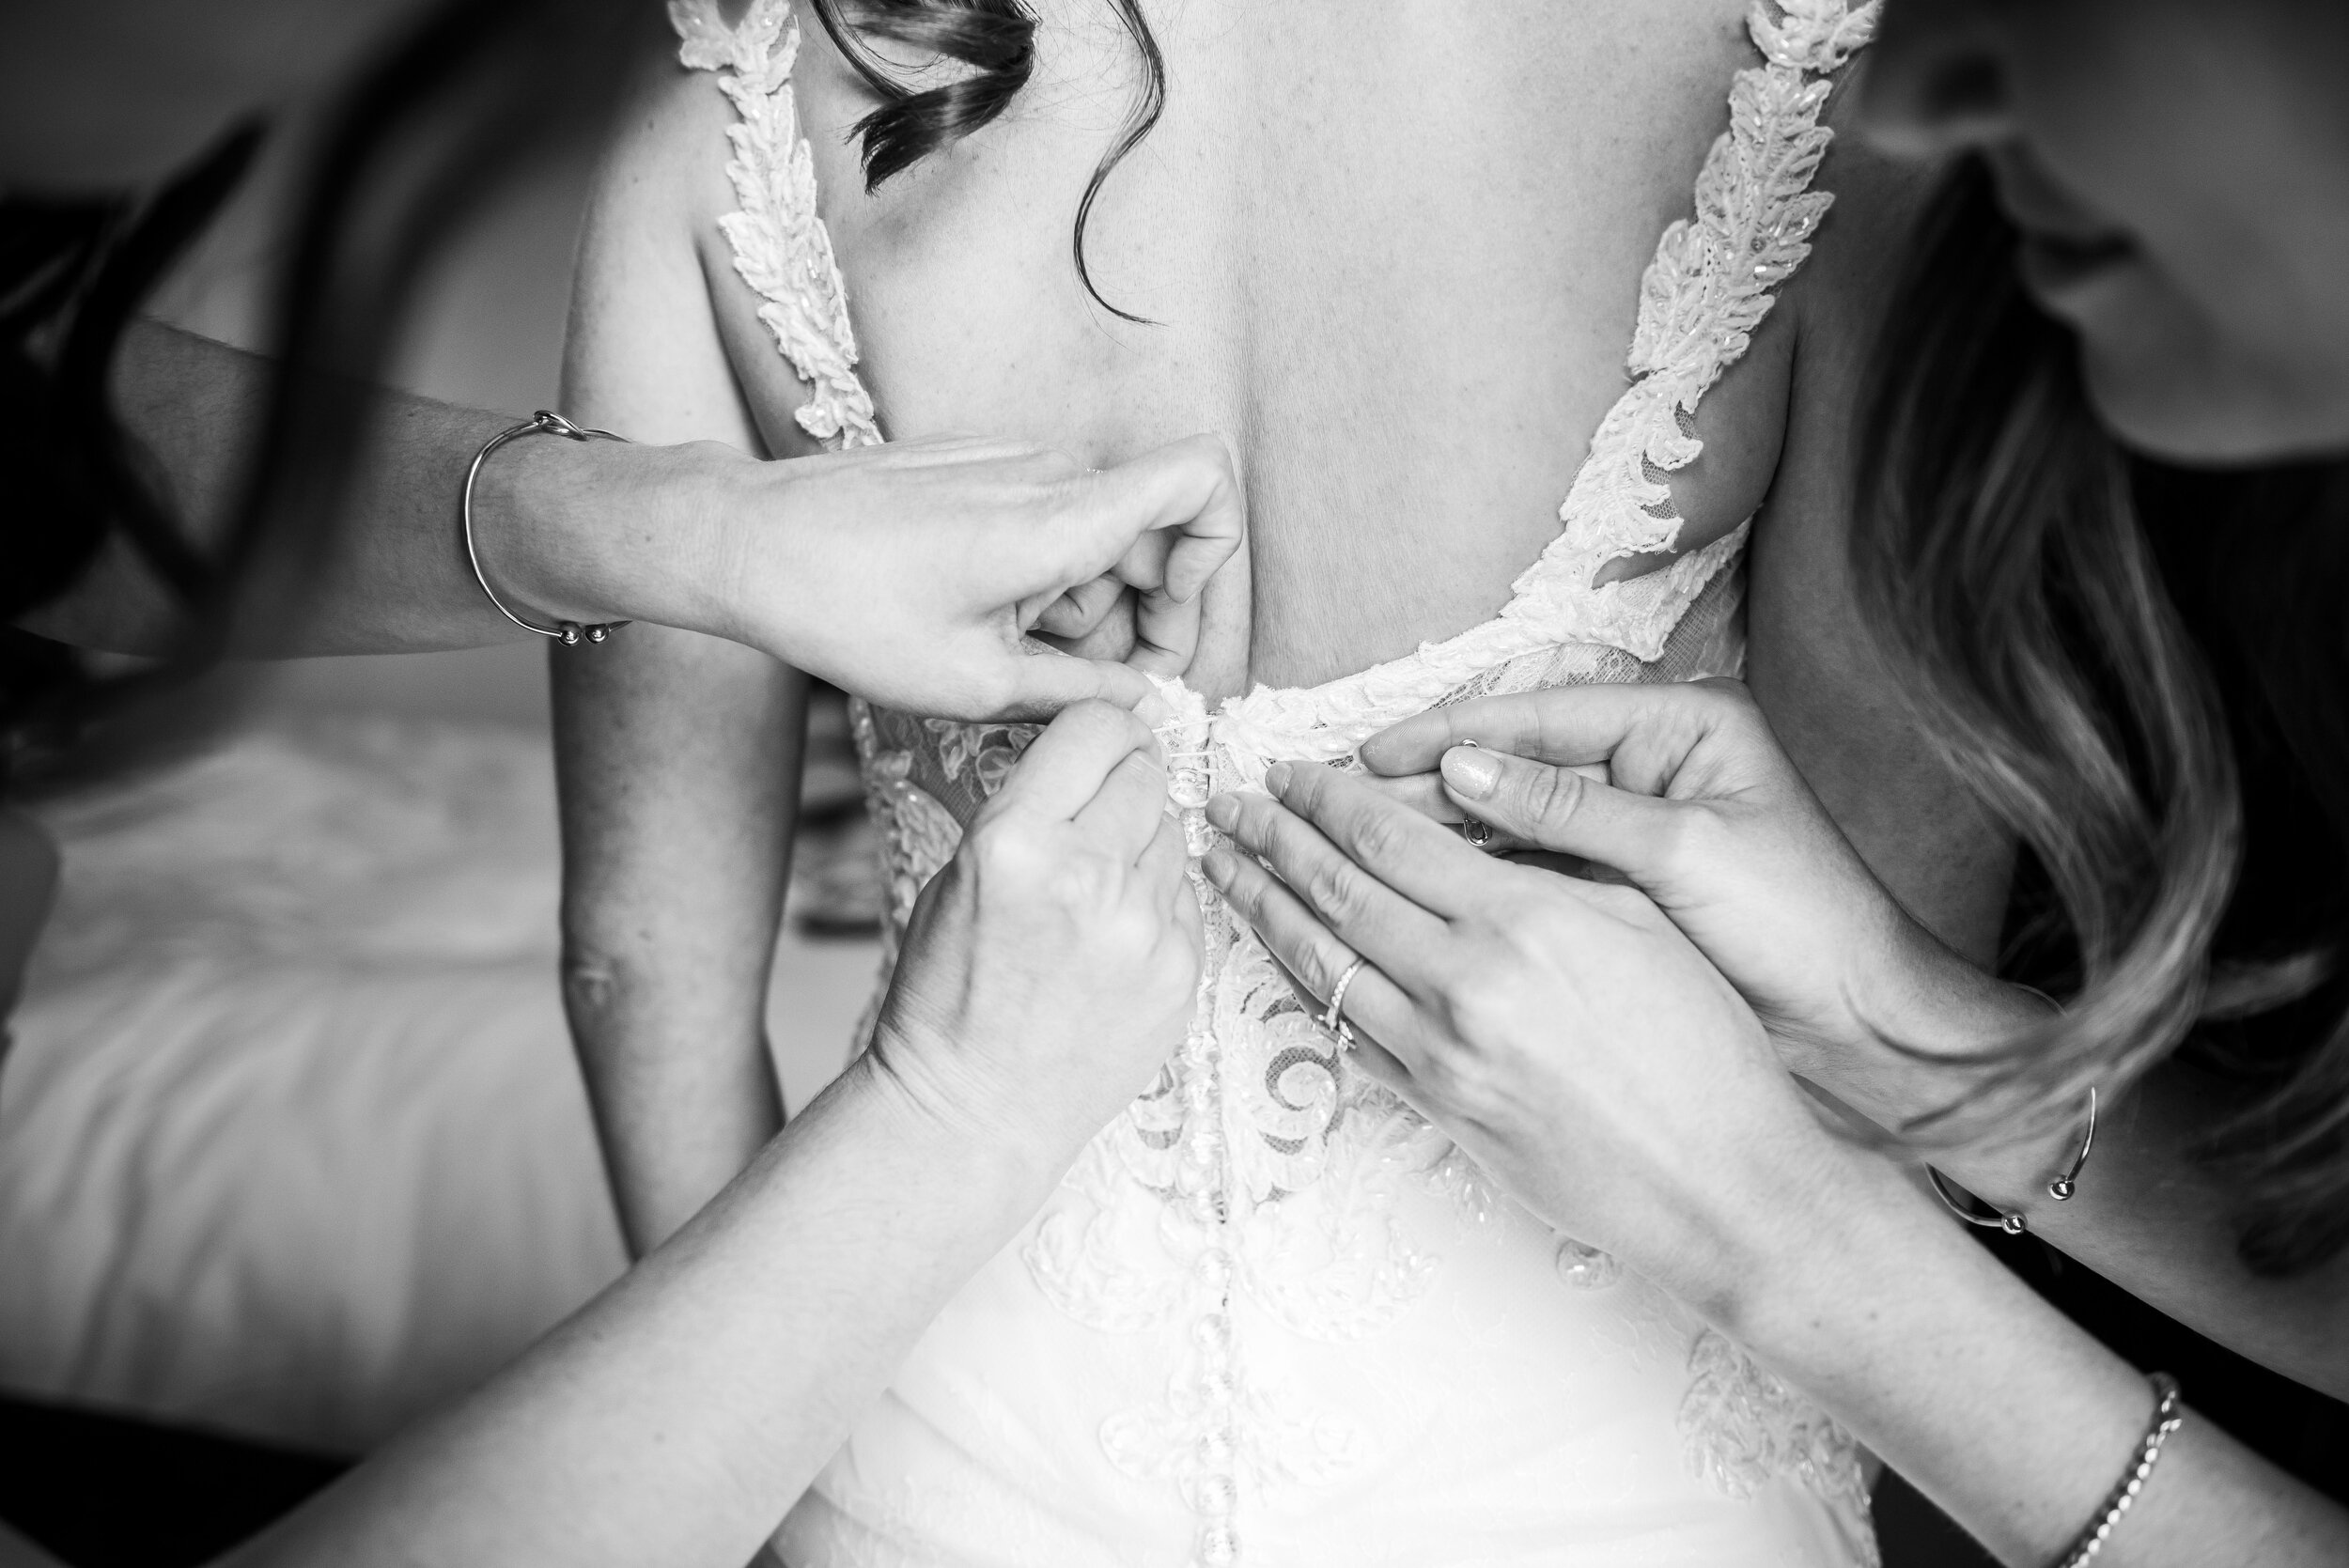 Wedding dress button details: Loews Chicago Hotel Wedding captured by J. Brown Photography